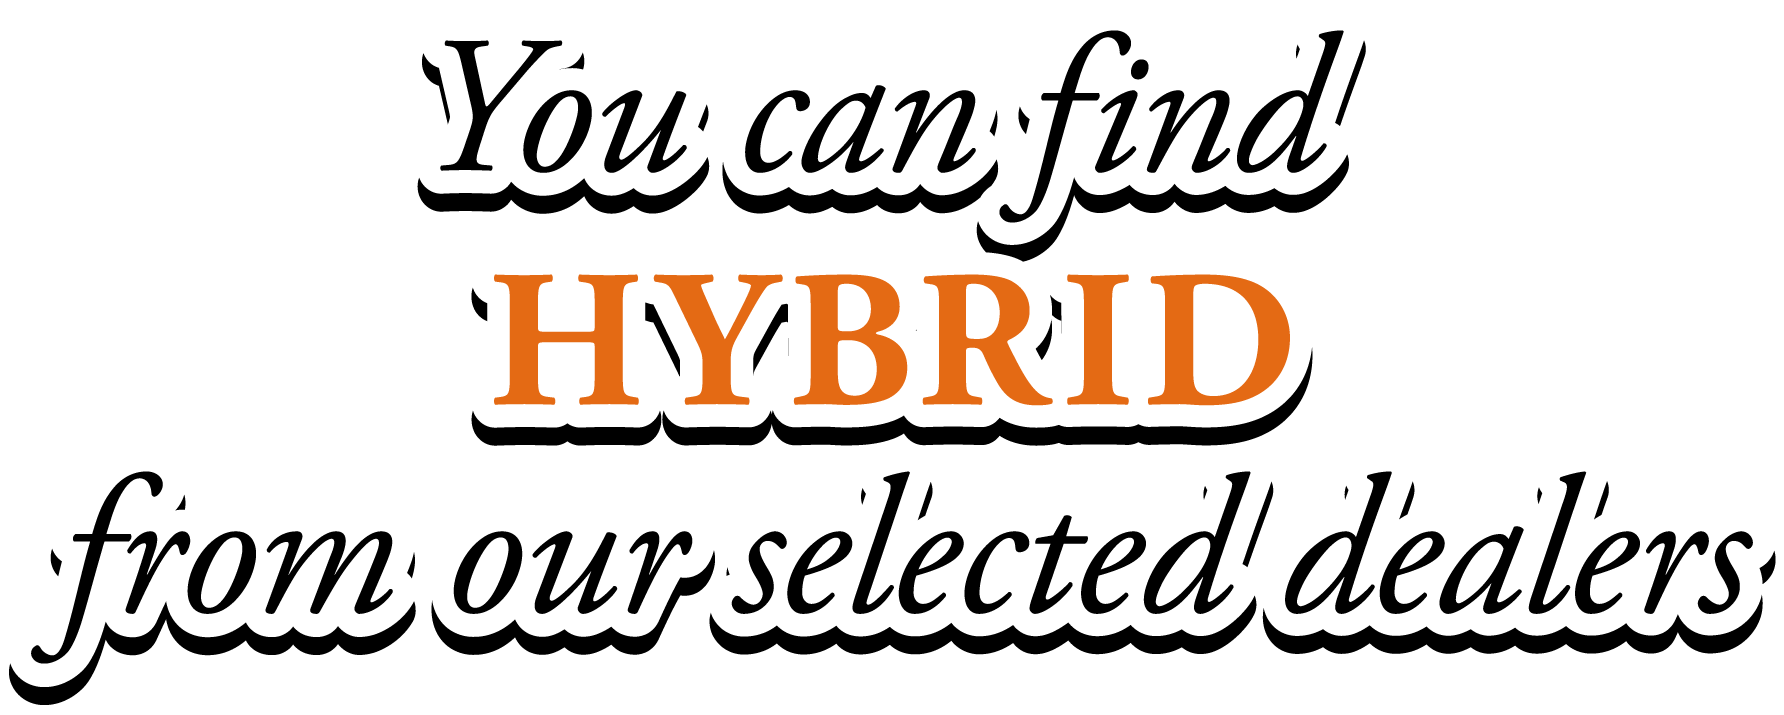 hybrid-selected-dealers